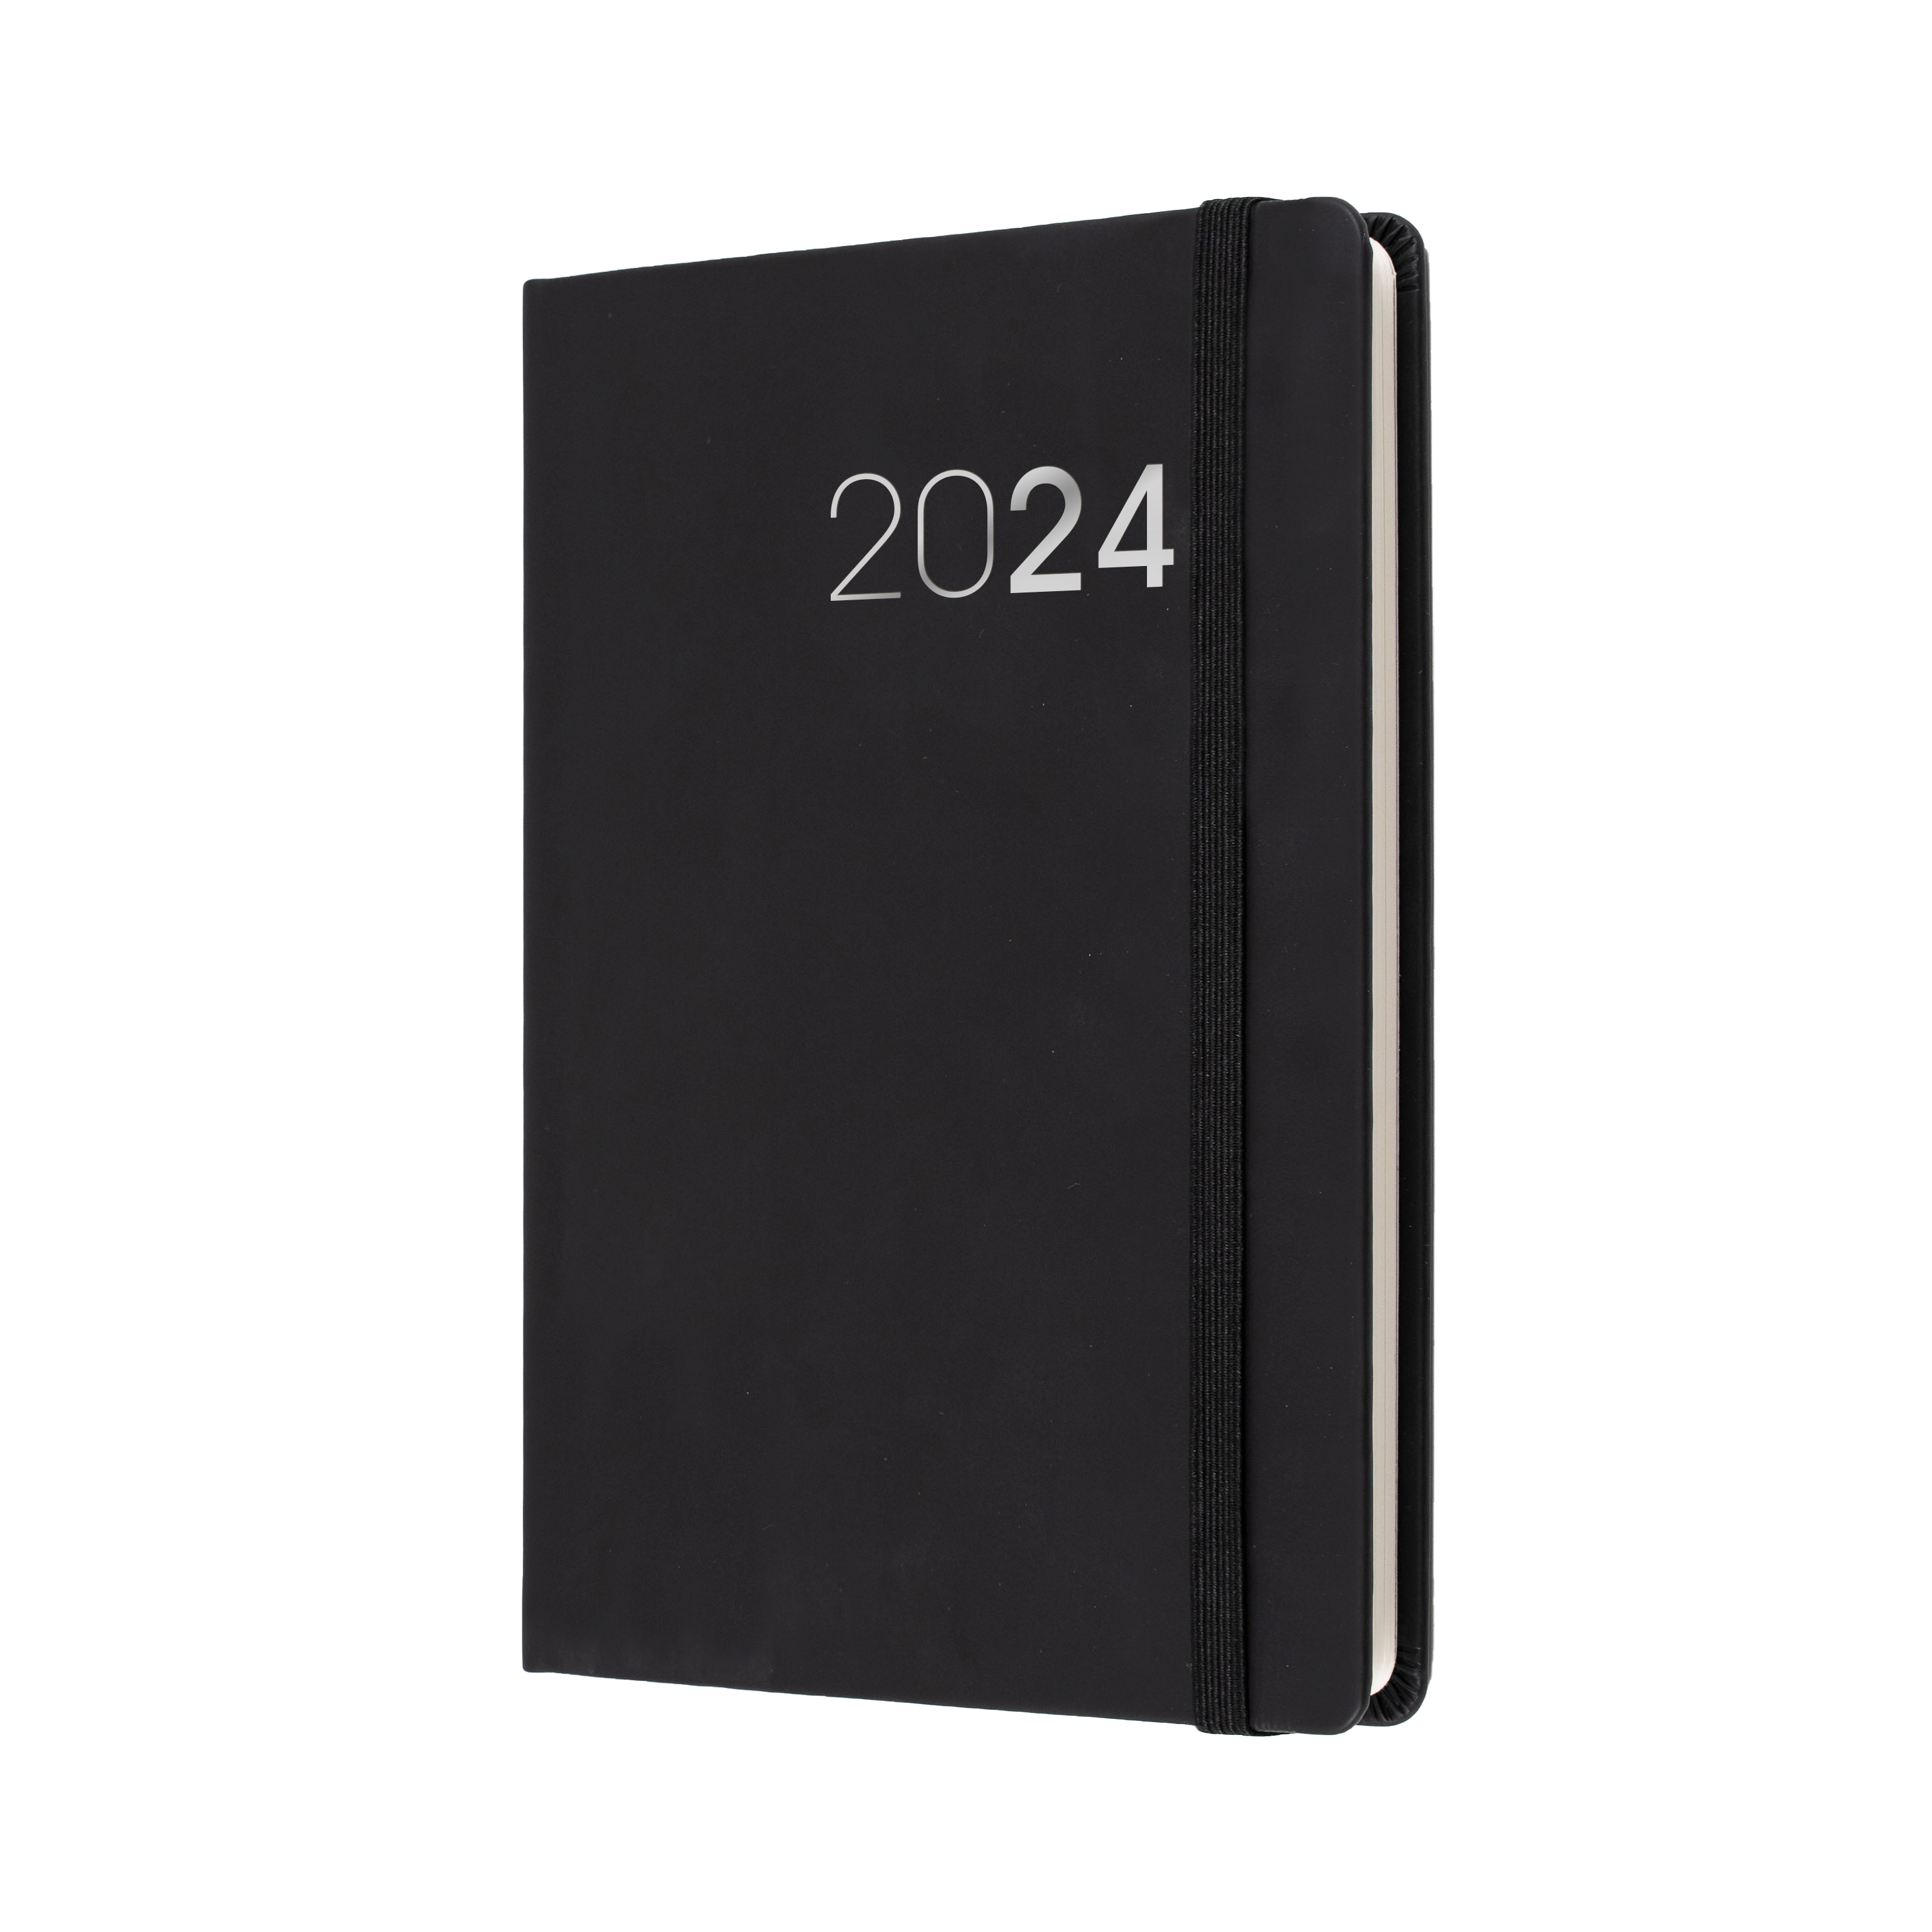 Legacy 2024 Diary - Week to View, Size Pocket Black / Pocket (132 x 85mm)